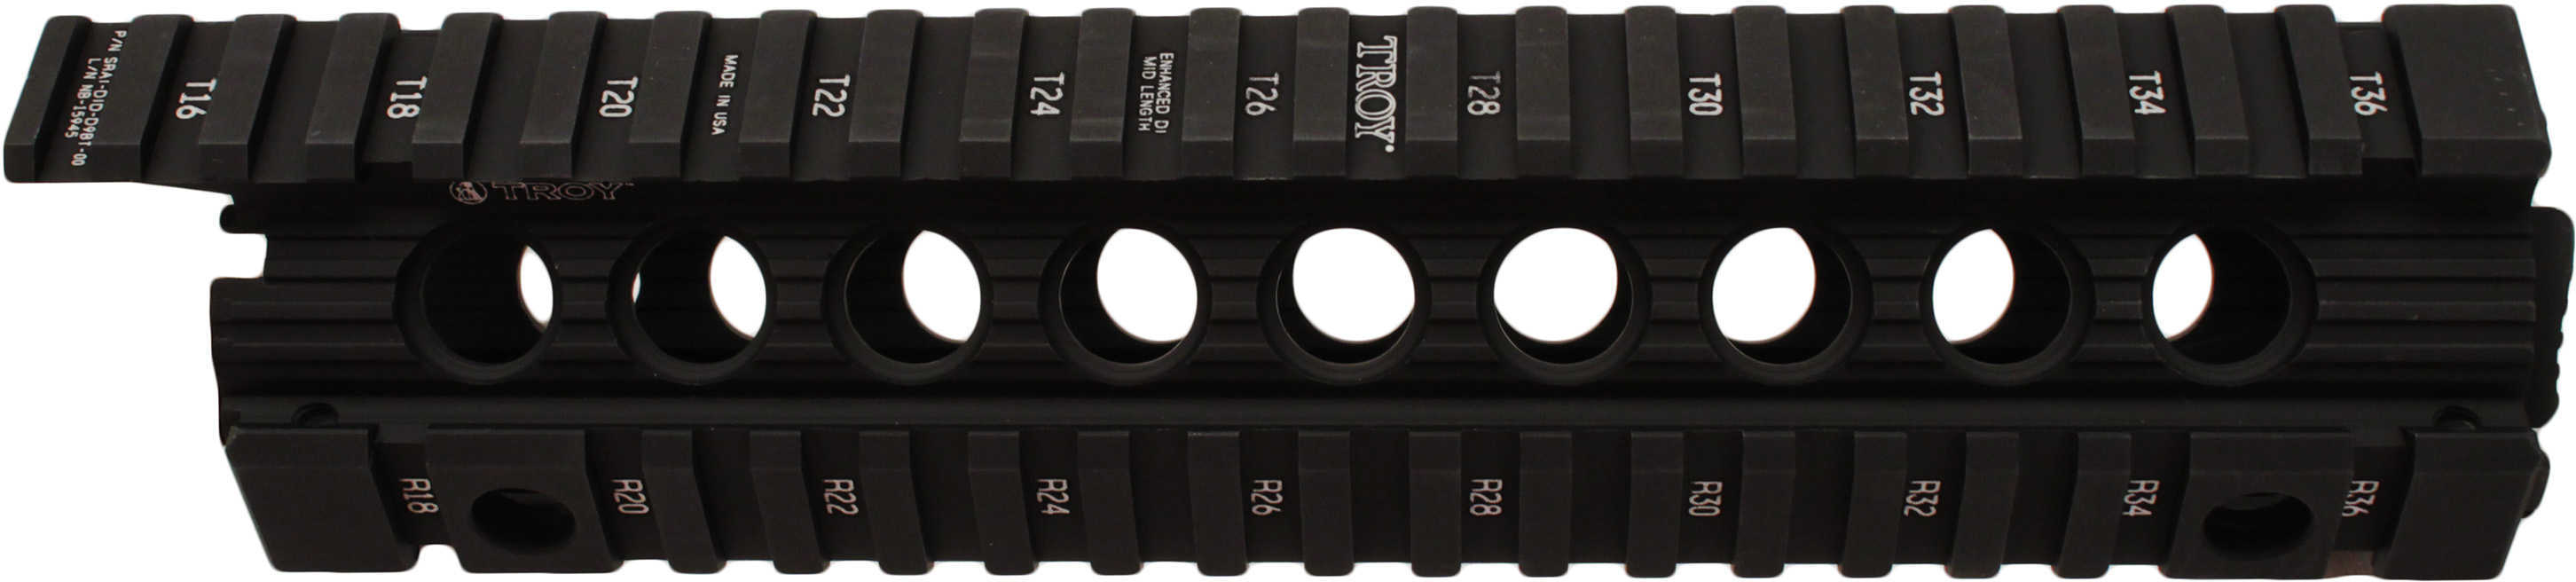 TROY Enhanced Rail 9" Drop In Picatinny on All Four Sides Built-in Sockets for QD Swivels SRAI-DID-D9BT-00